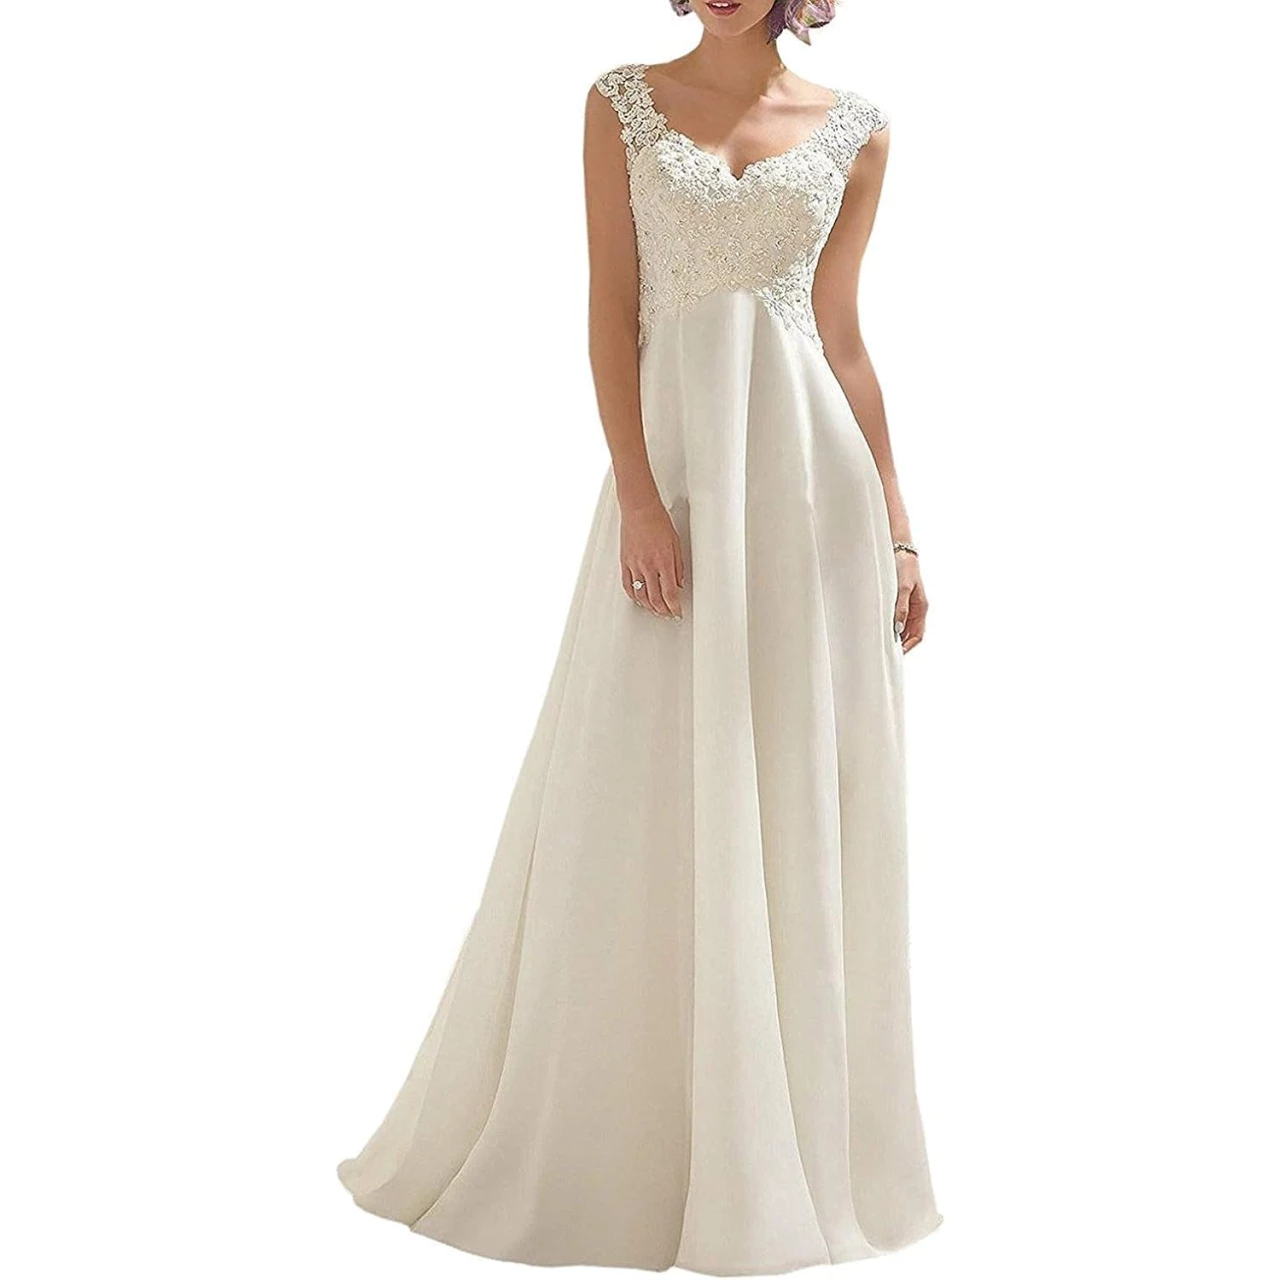 Abaowedding Women&rsquo;s Wedding Dress Lace Double V-Neck Sleeveless Evening Dress